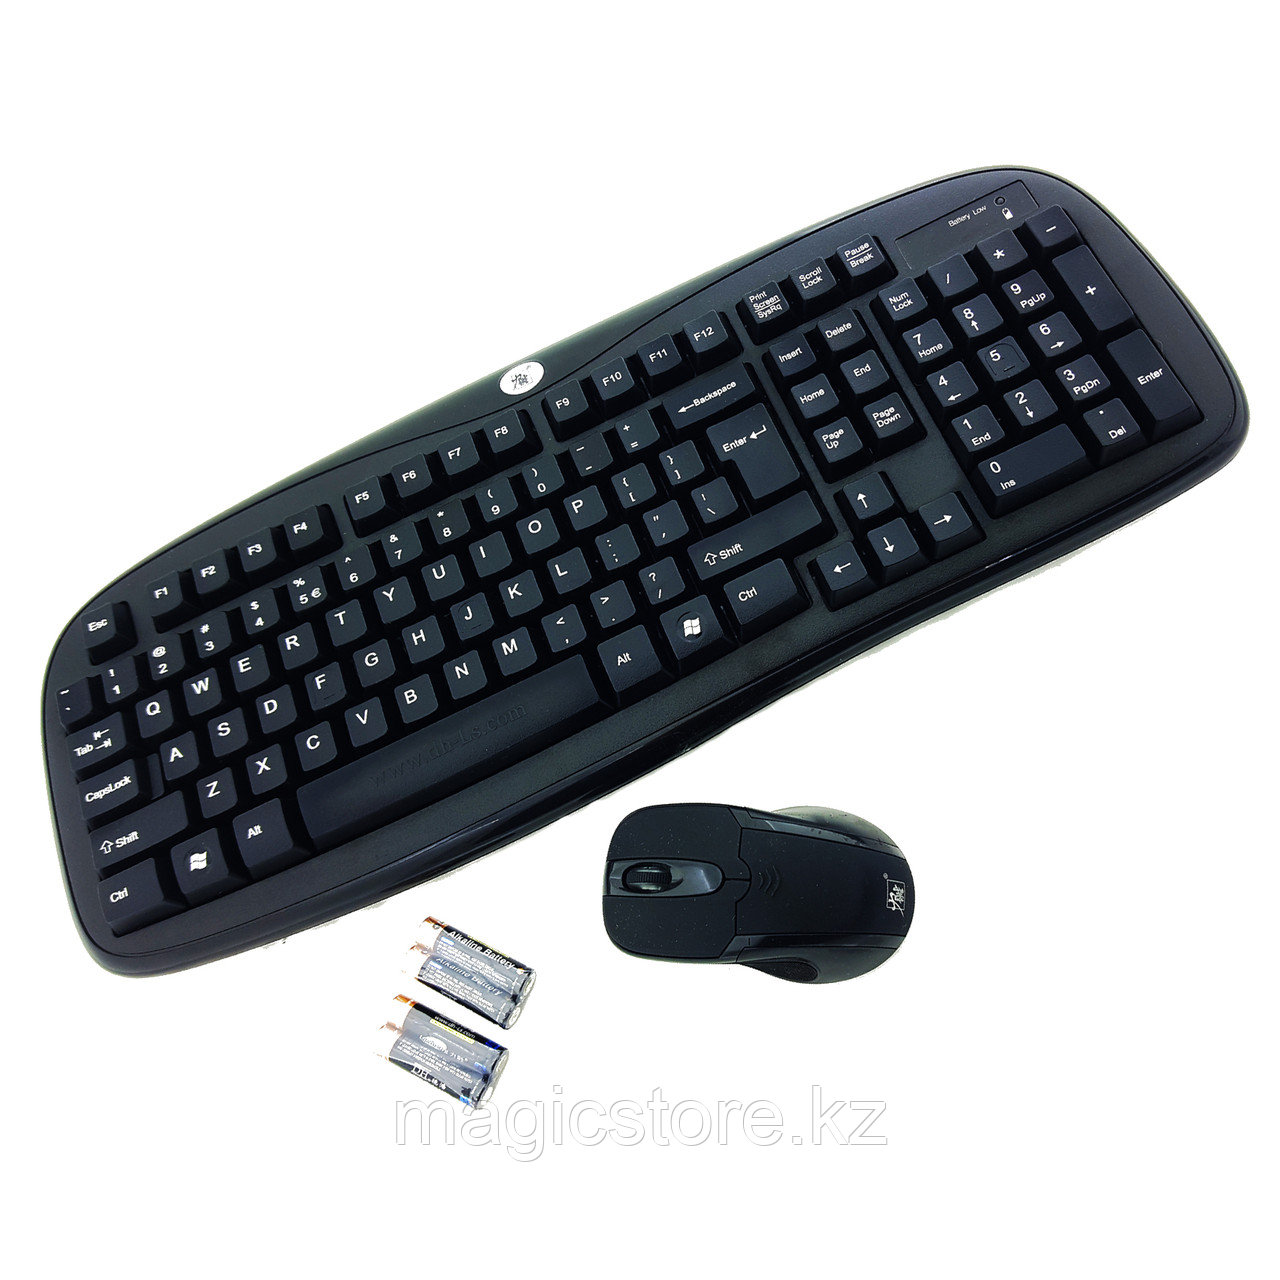 Клавиатура беспроводная + Мышь Lisheng 2,4G RGK-3100 USB, черная